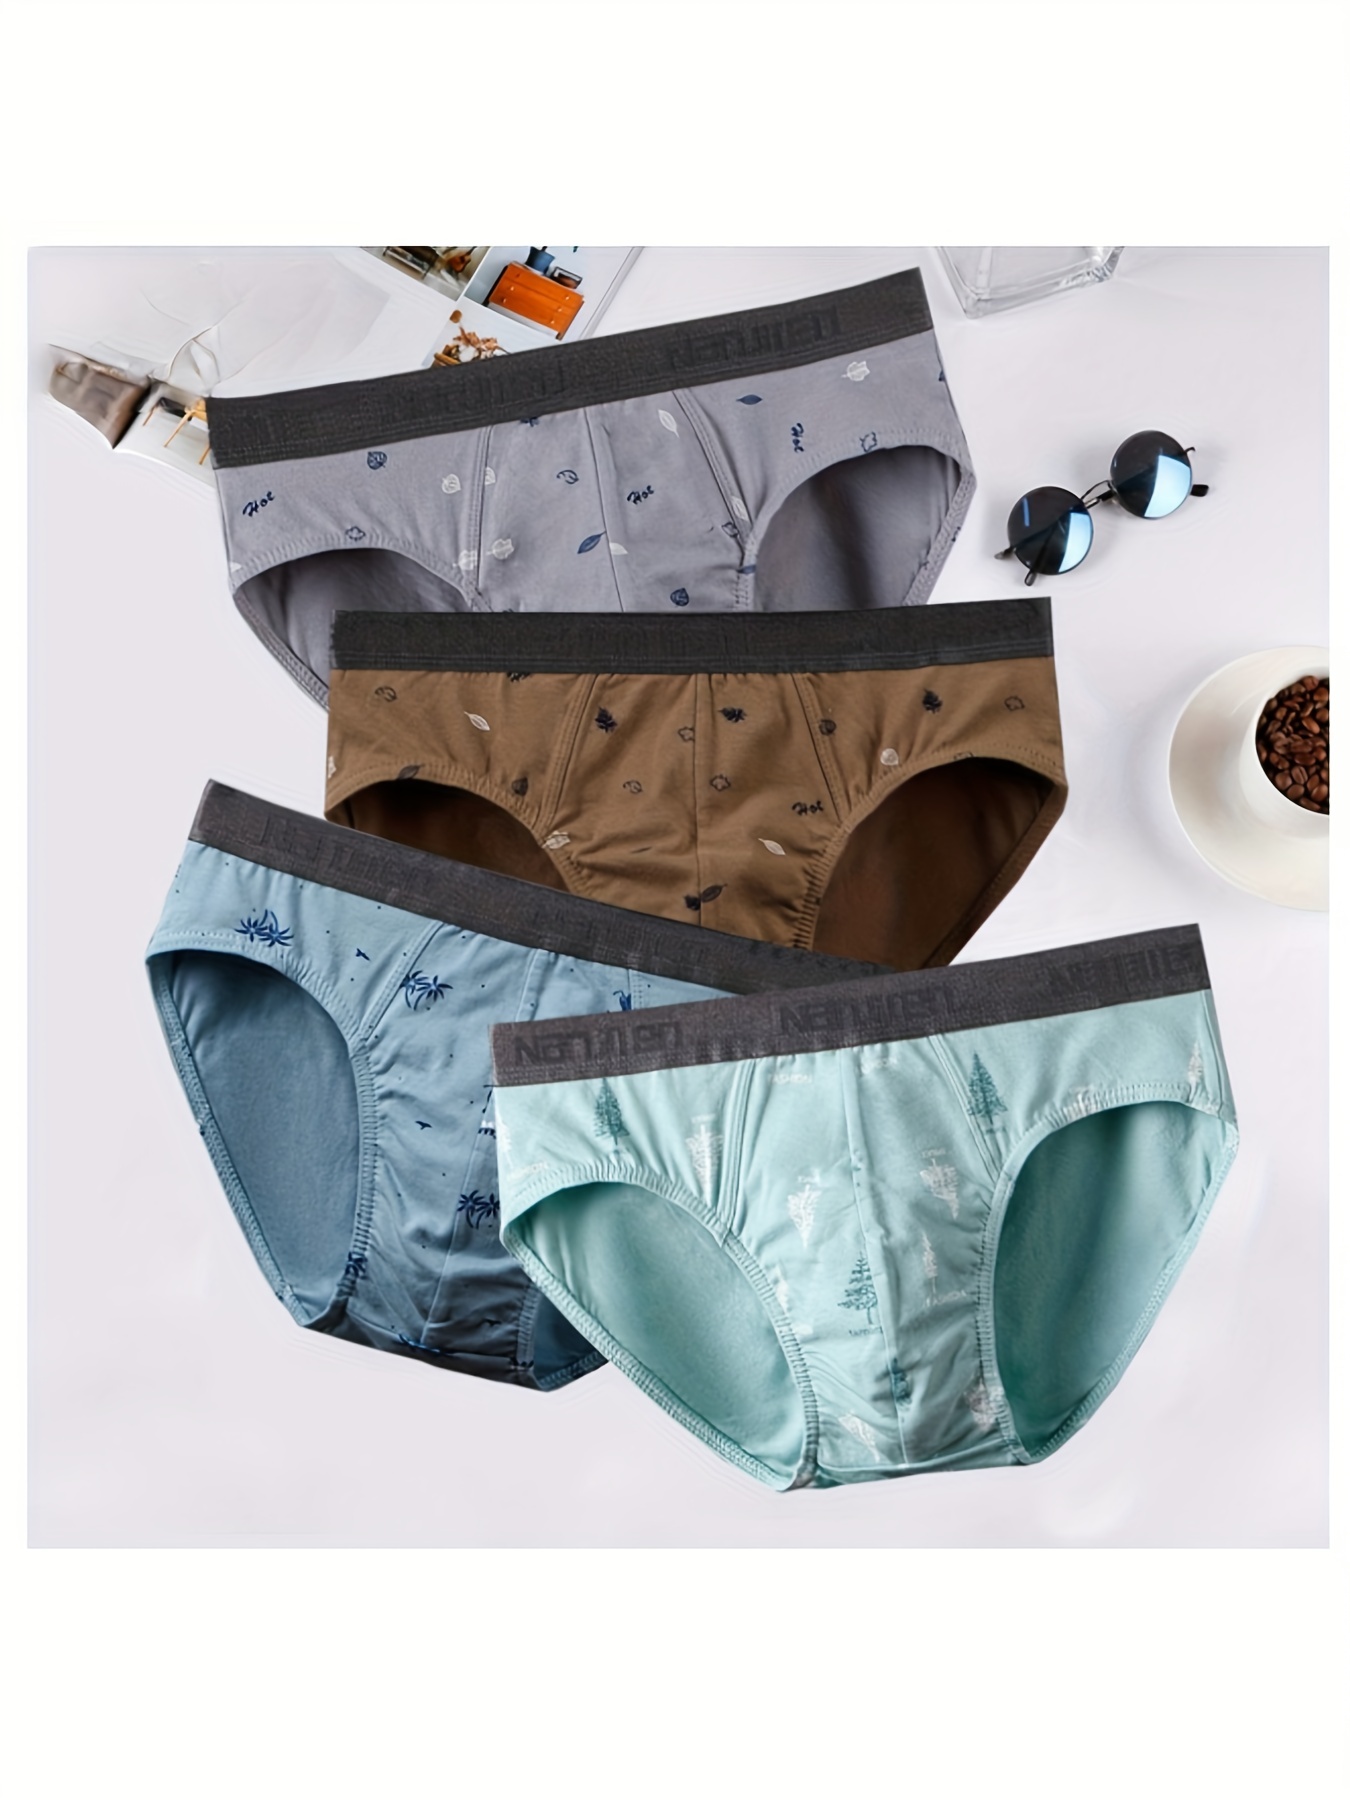 Fashion 4pcs Men Underwear Boxers Panties Comfortable Soft @ Best Price  Online